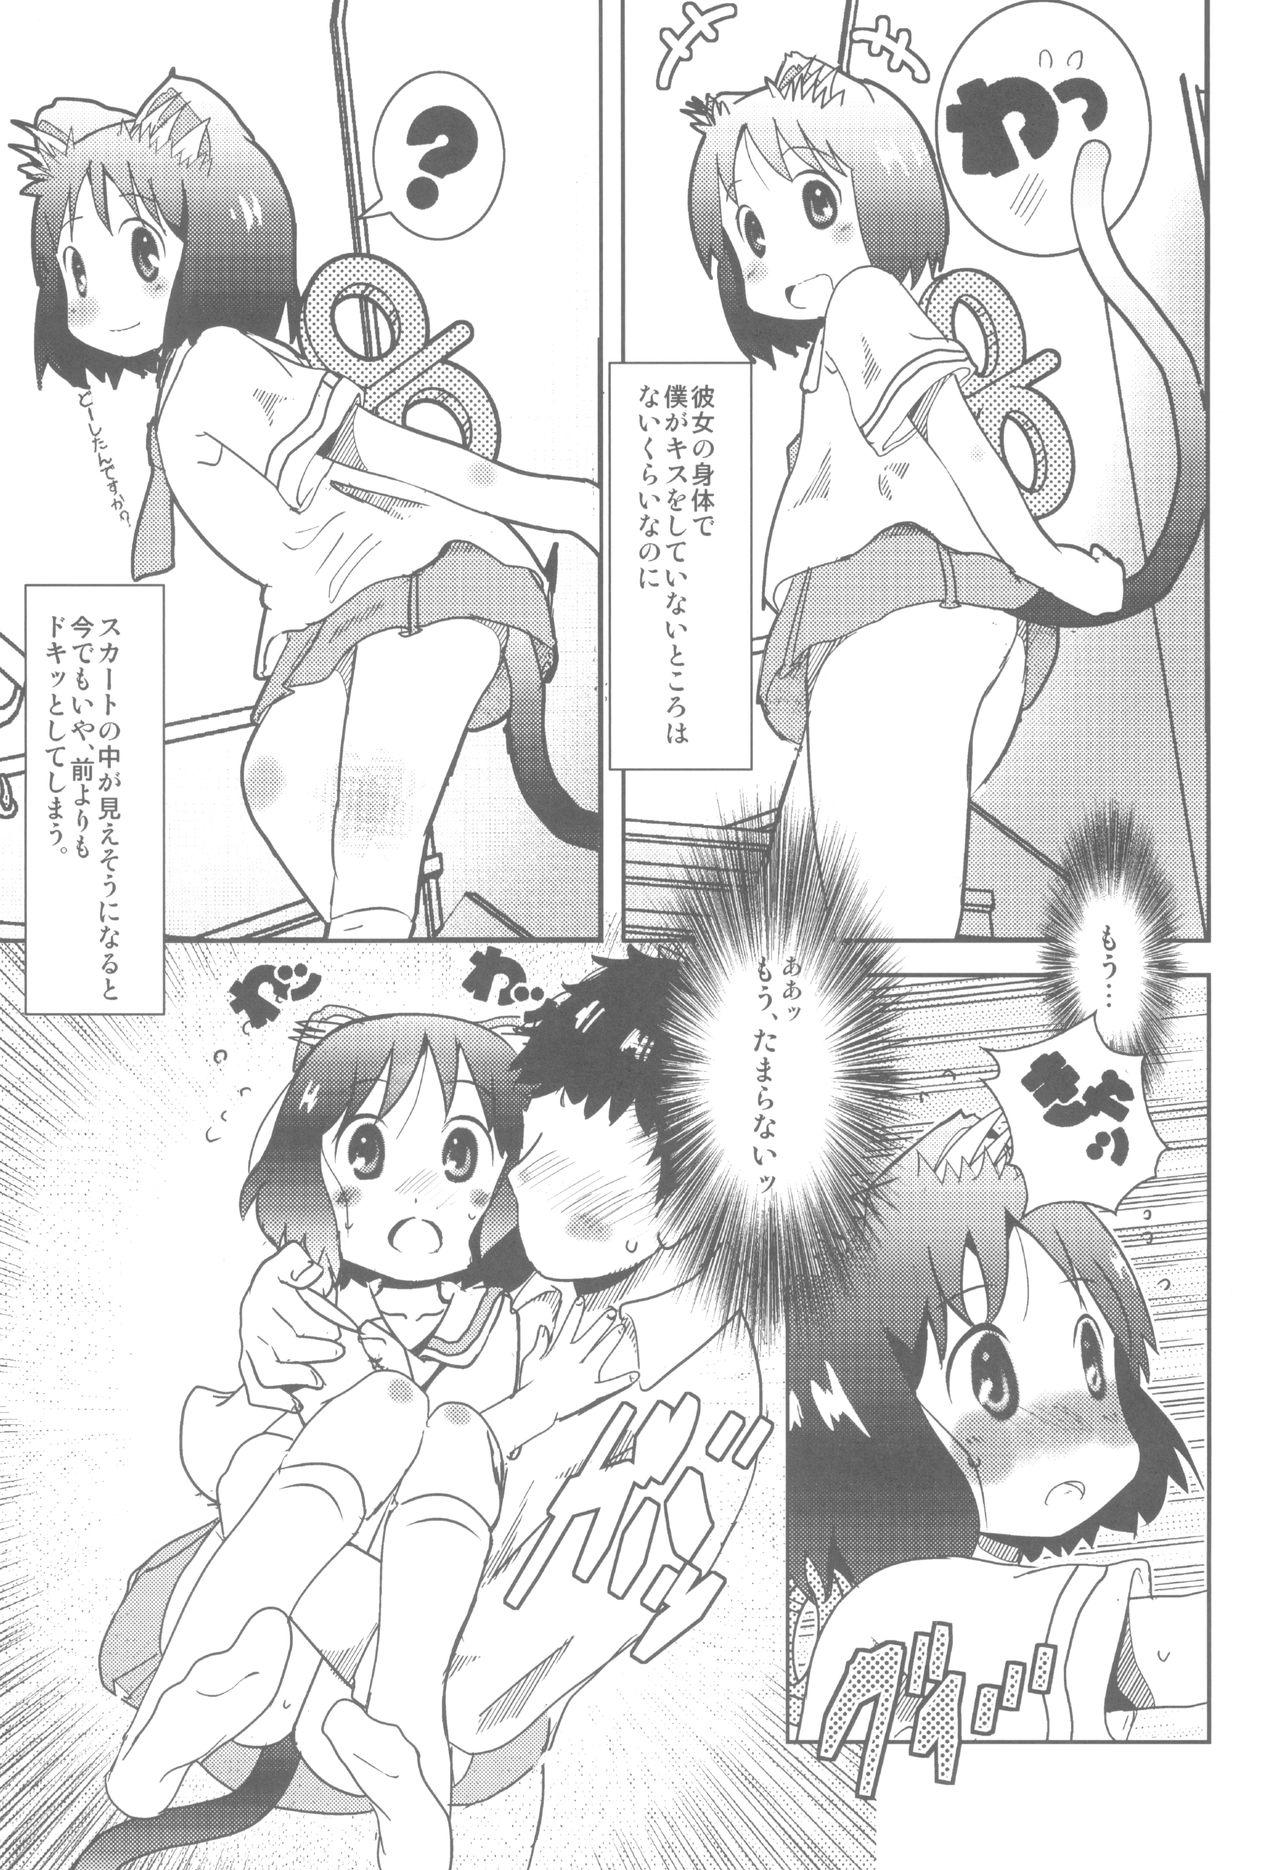 Titten Starfish and Coffee Vol. 4 - Nichijou Weird - Page 11